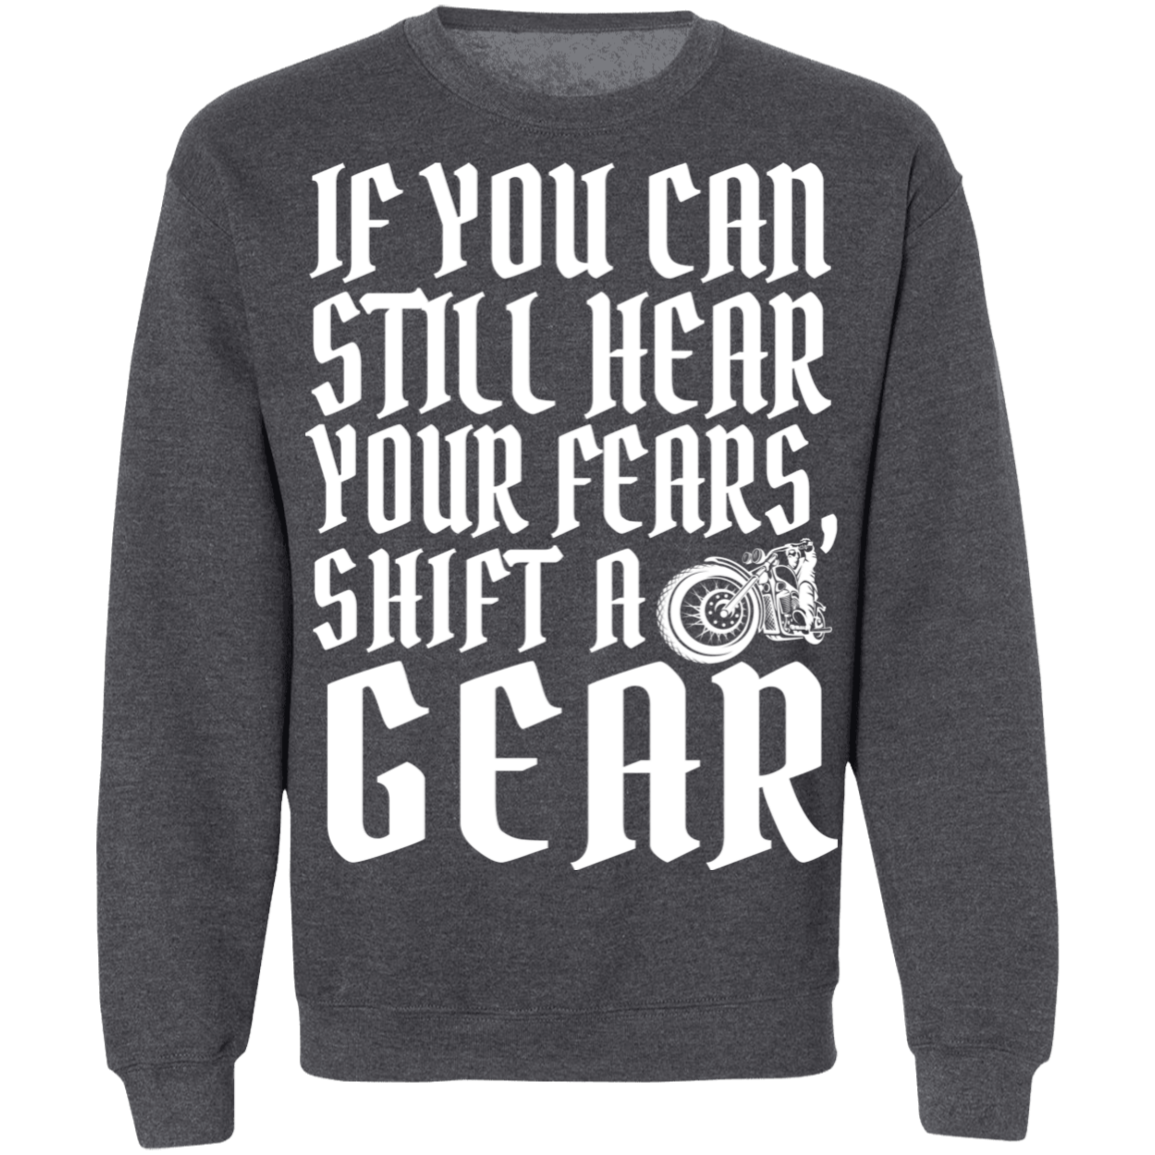 If you can still hear your fears, shift a gear Shirt